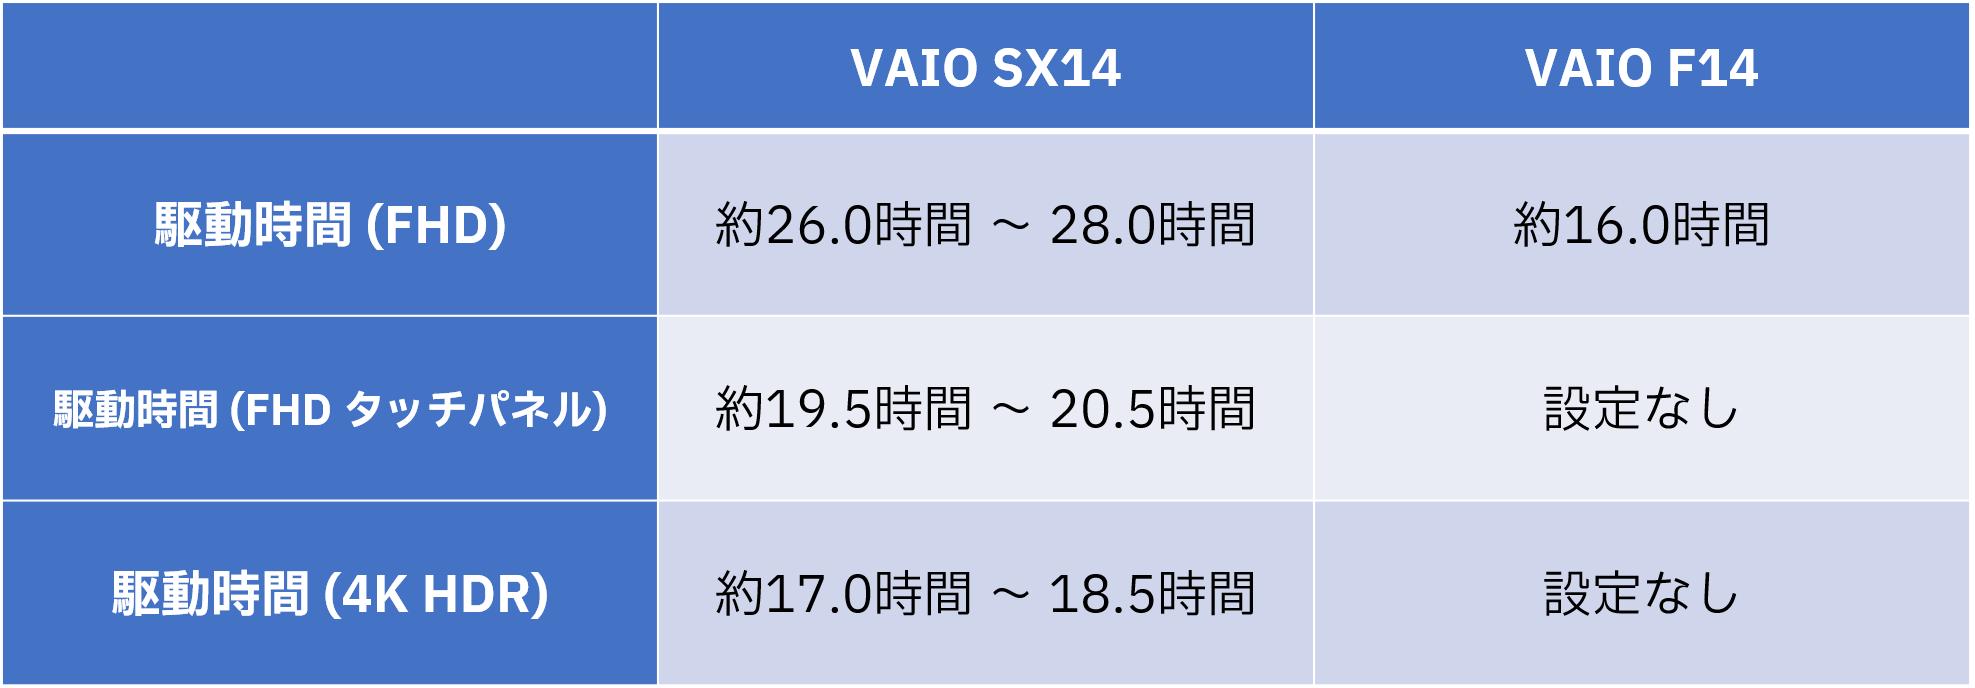 VAIO SX14とVAIO F14のバッテリー駆動時間